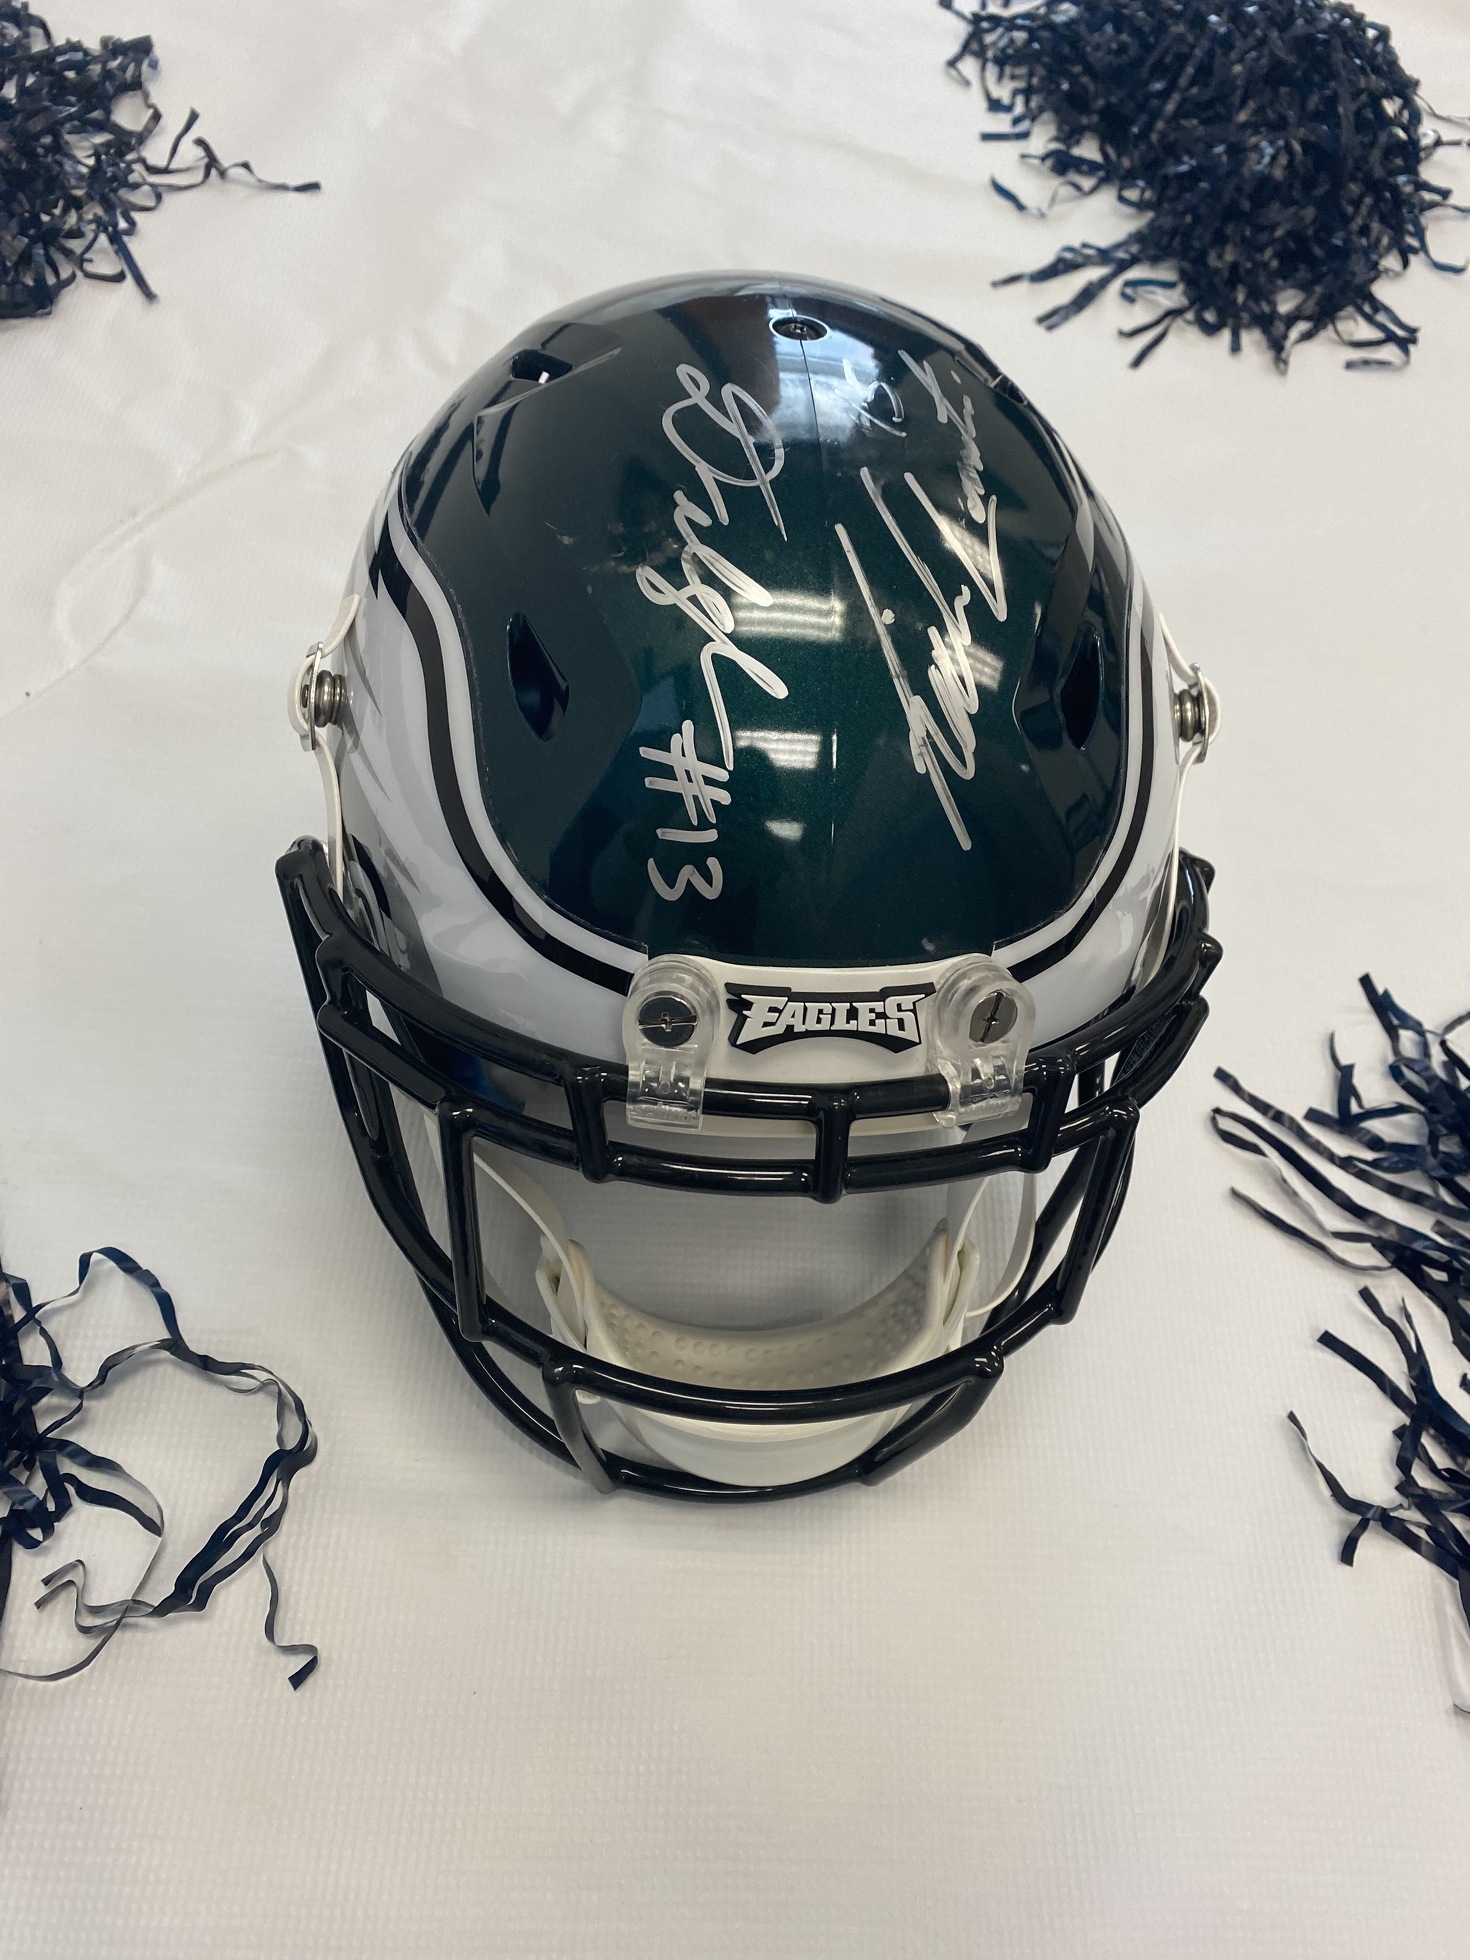 Authentic Autographed Philadelphia Eagles Helmet